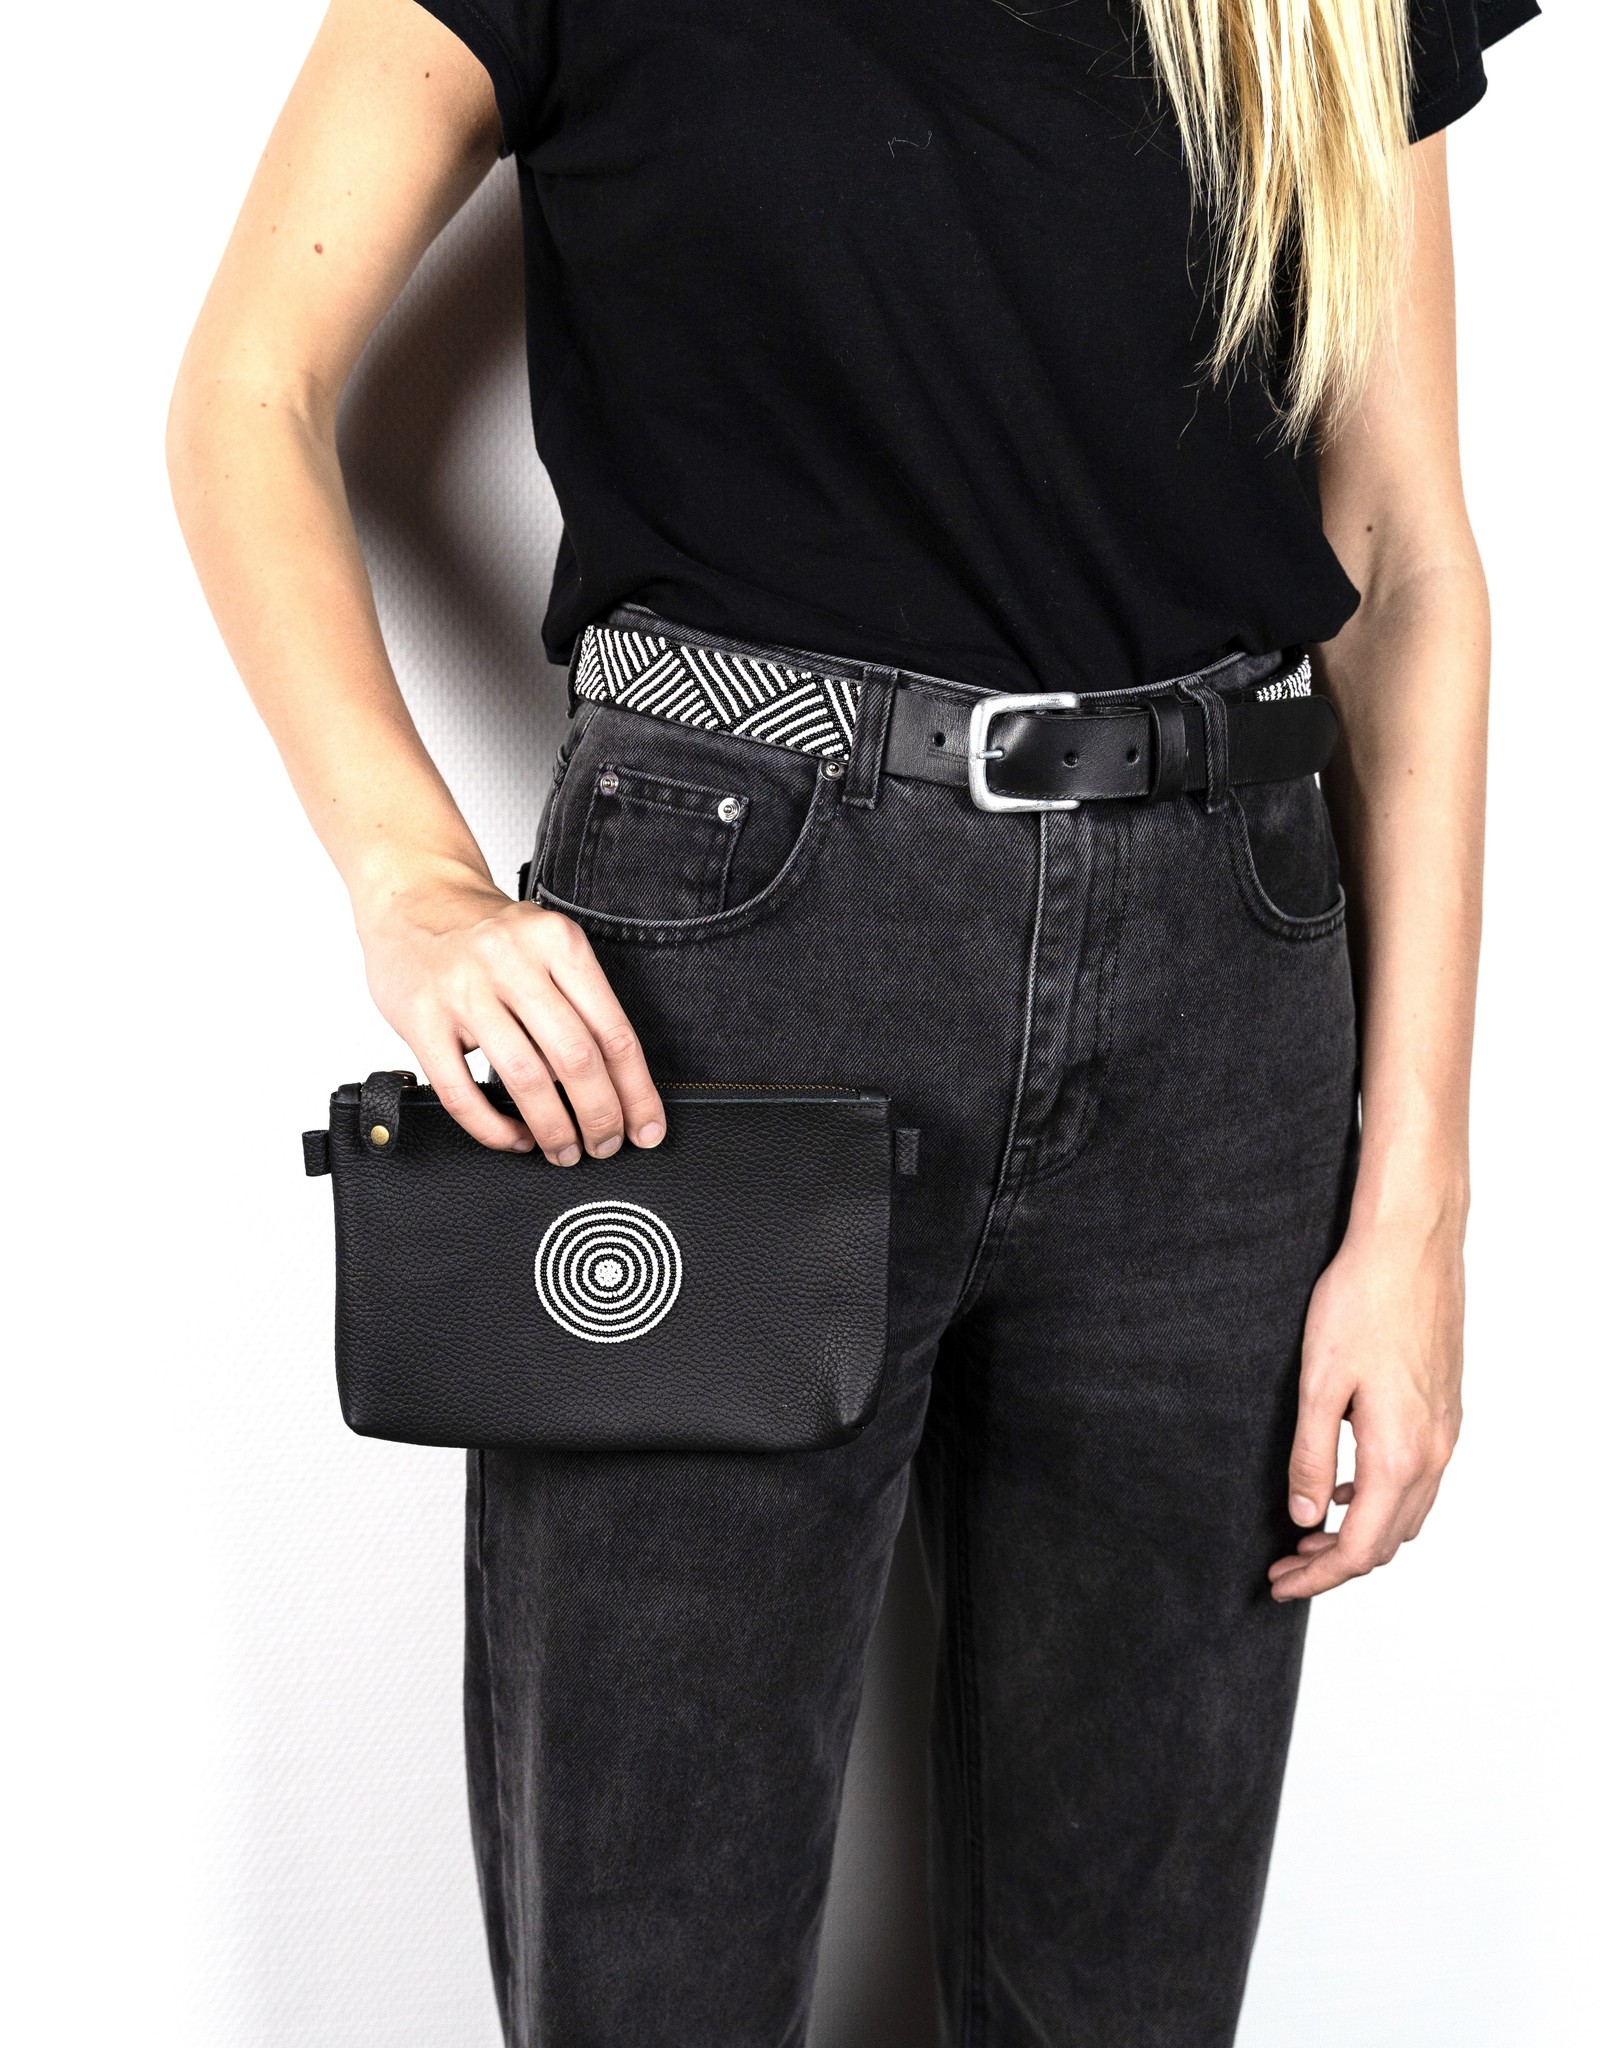 Maisha.Style Maisha purse - black leather purse with disc of black and white beads